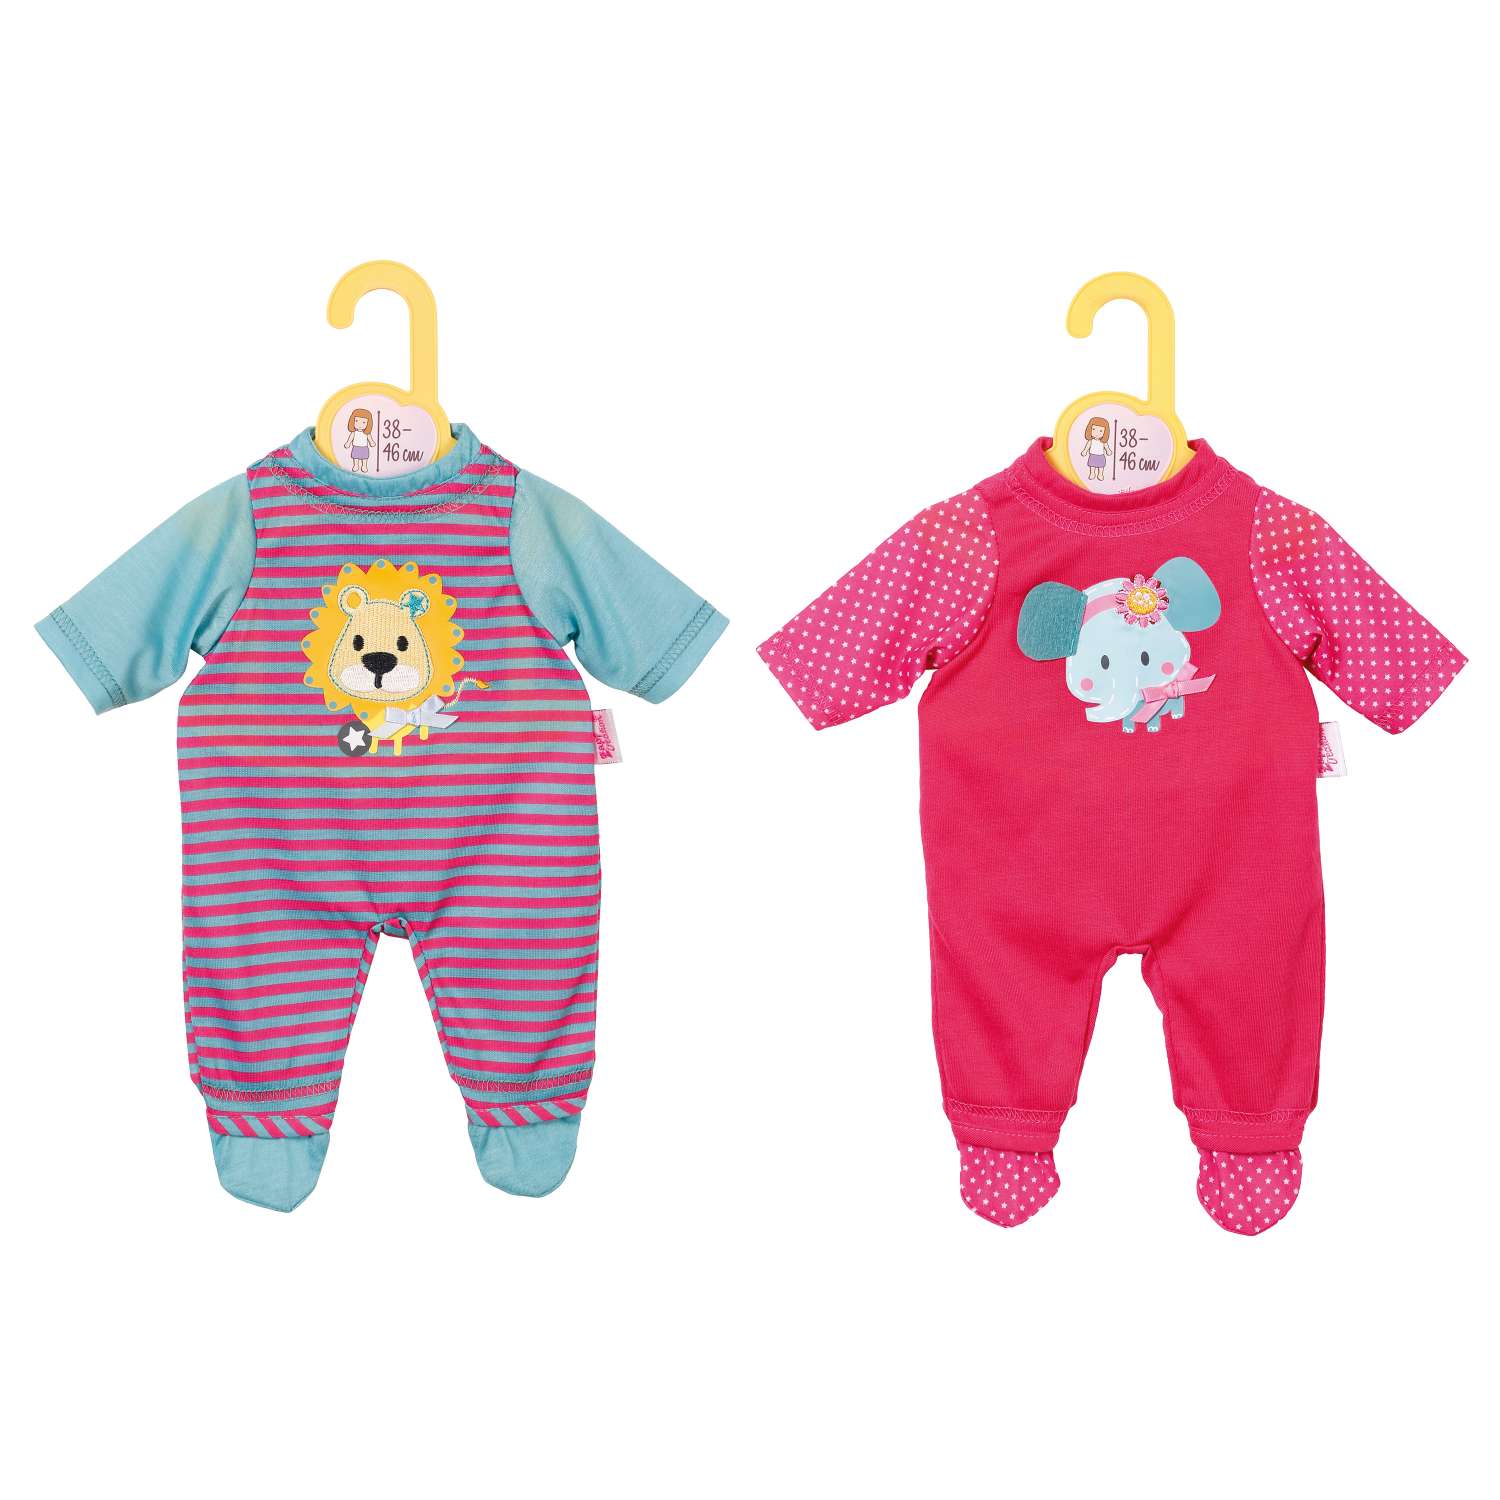 Одежда для куклы Zapf Creation Baby born в ассортименте 870-211 870-211 - фото 1